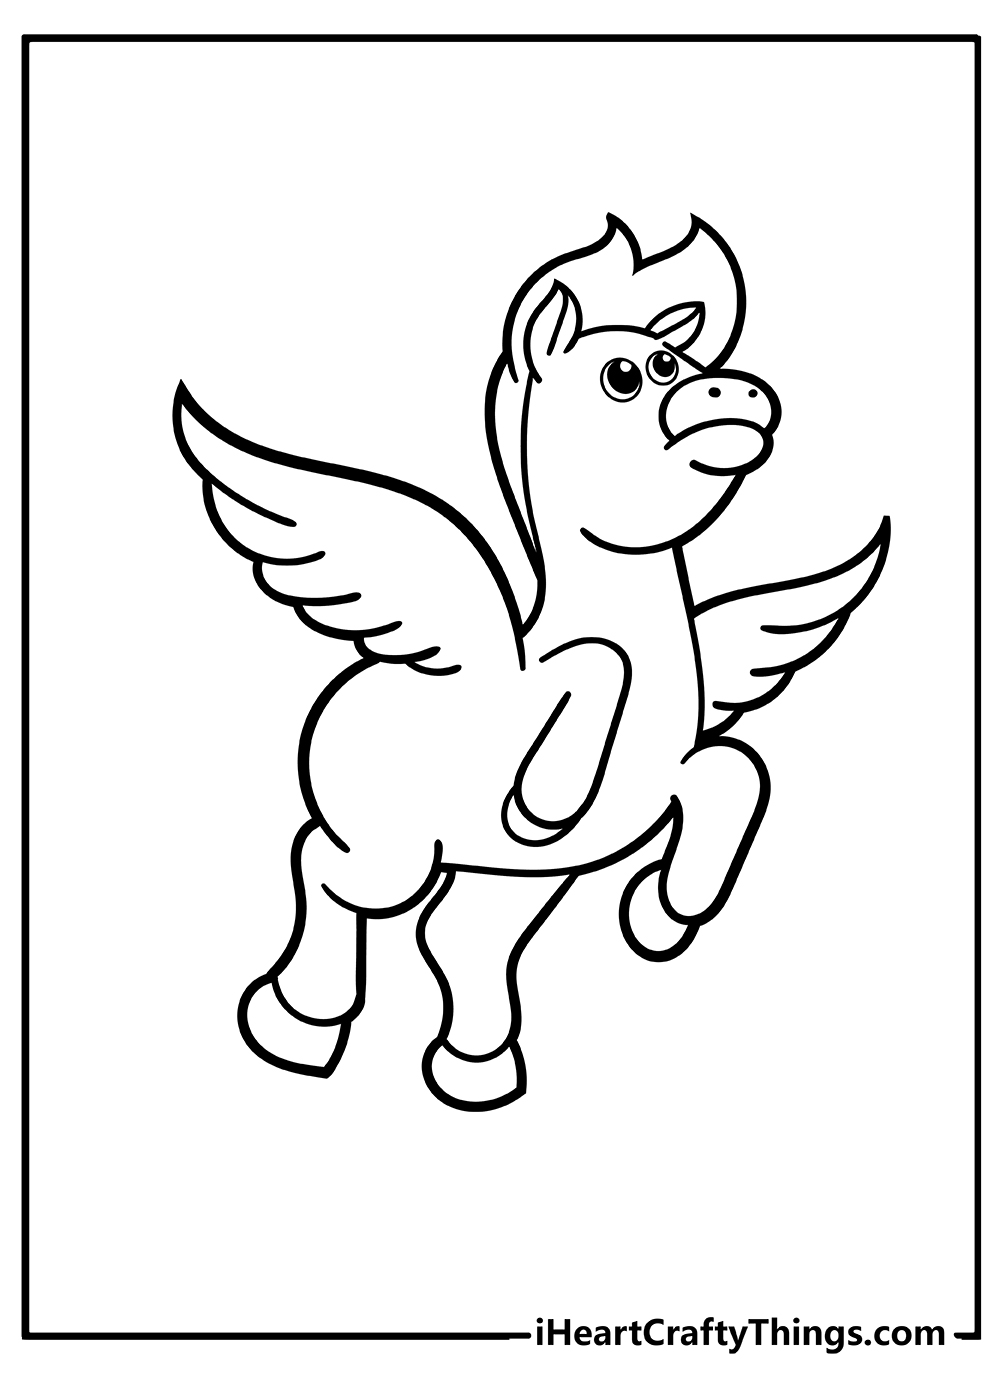 Pegasus Coloring Sheet for children free download